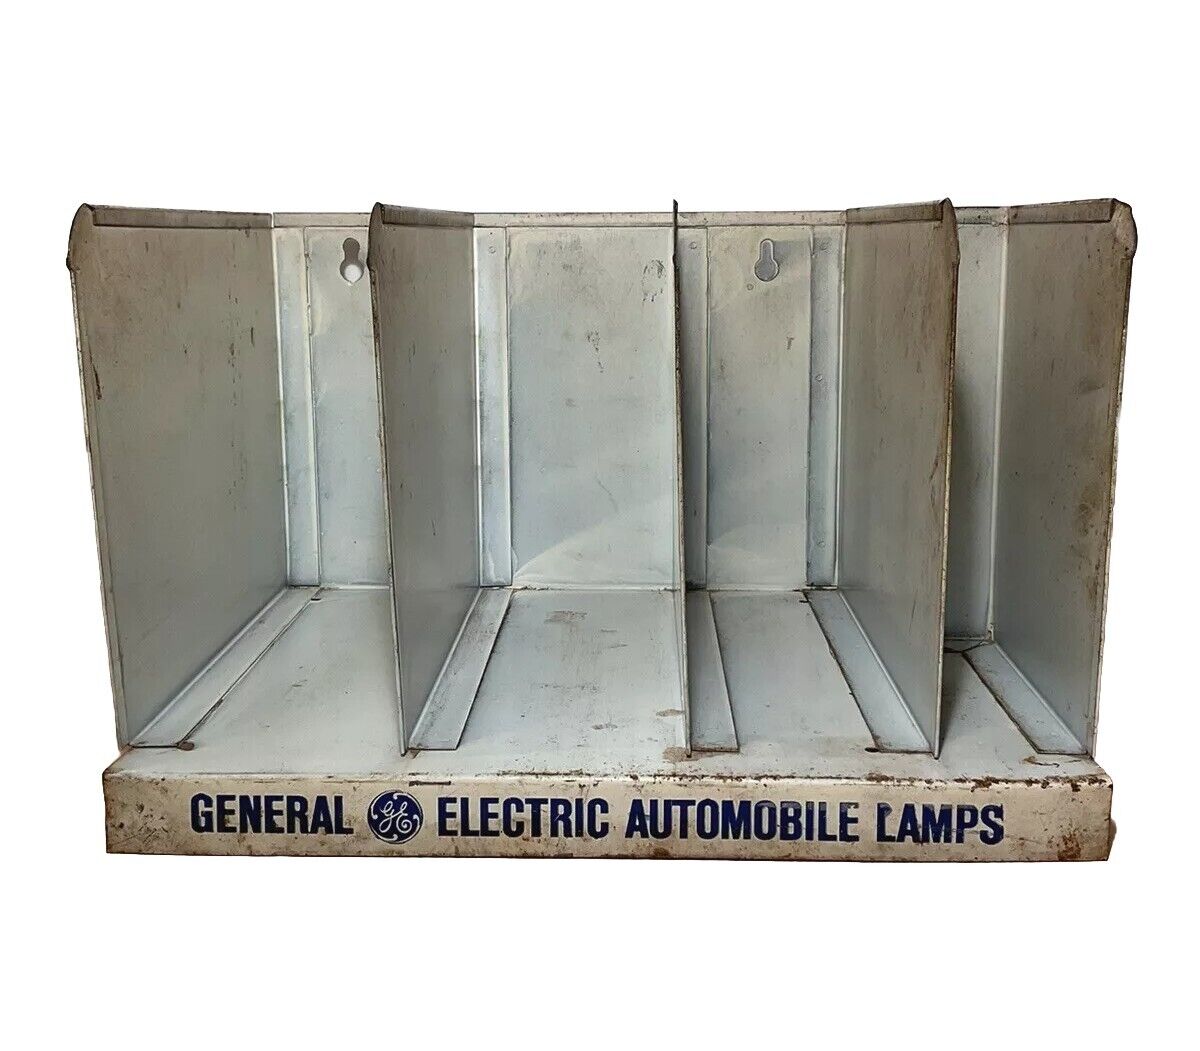 Vintage GE General Electric Store Display Automobile Lamps Advertising Metal